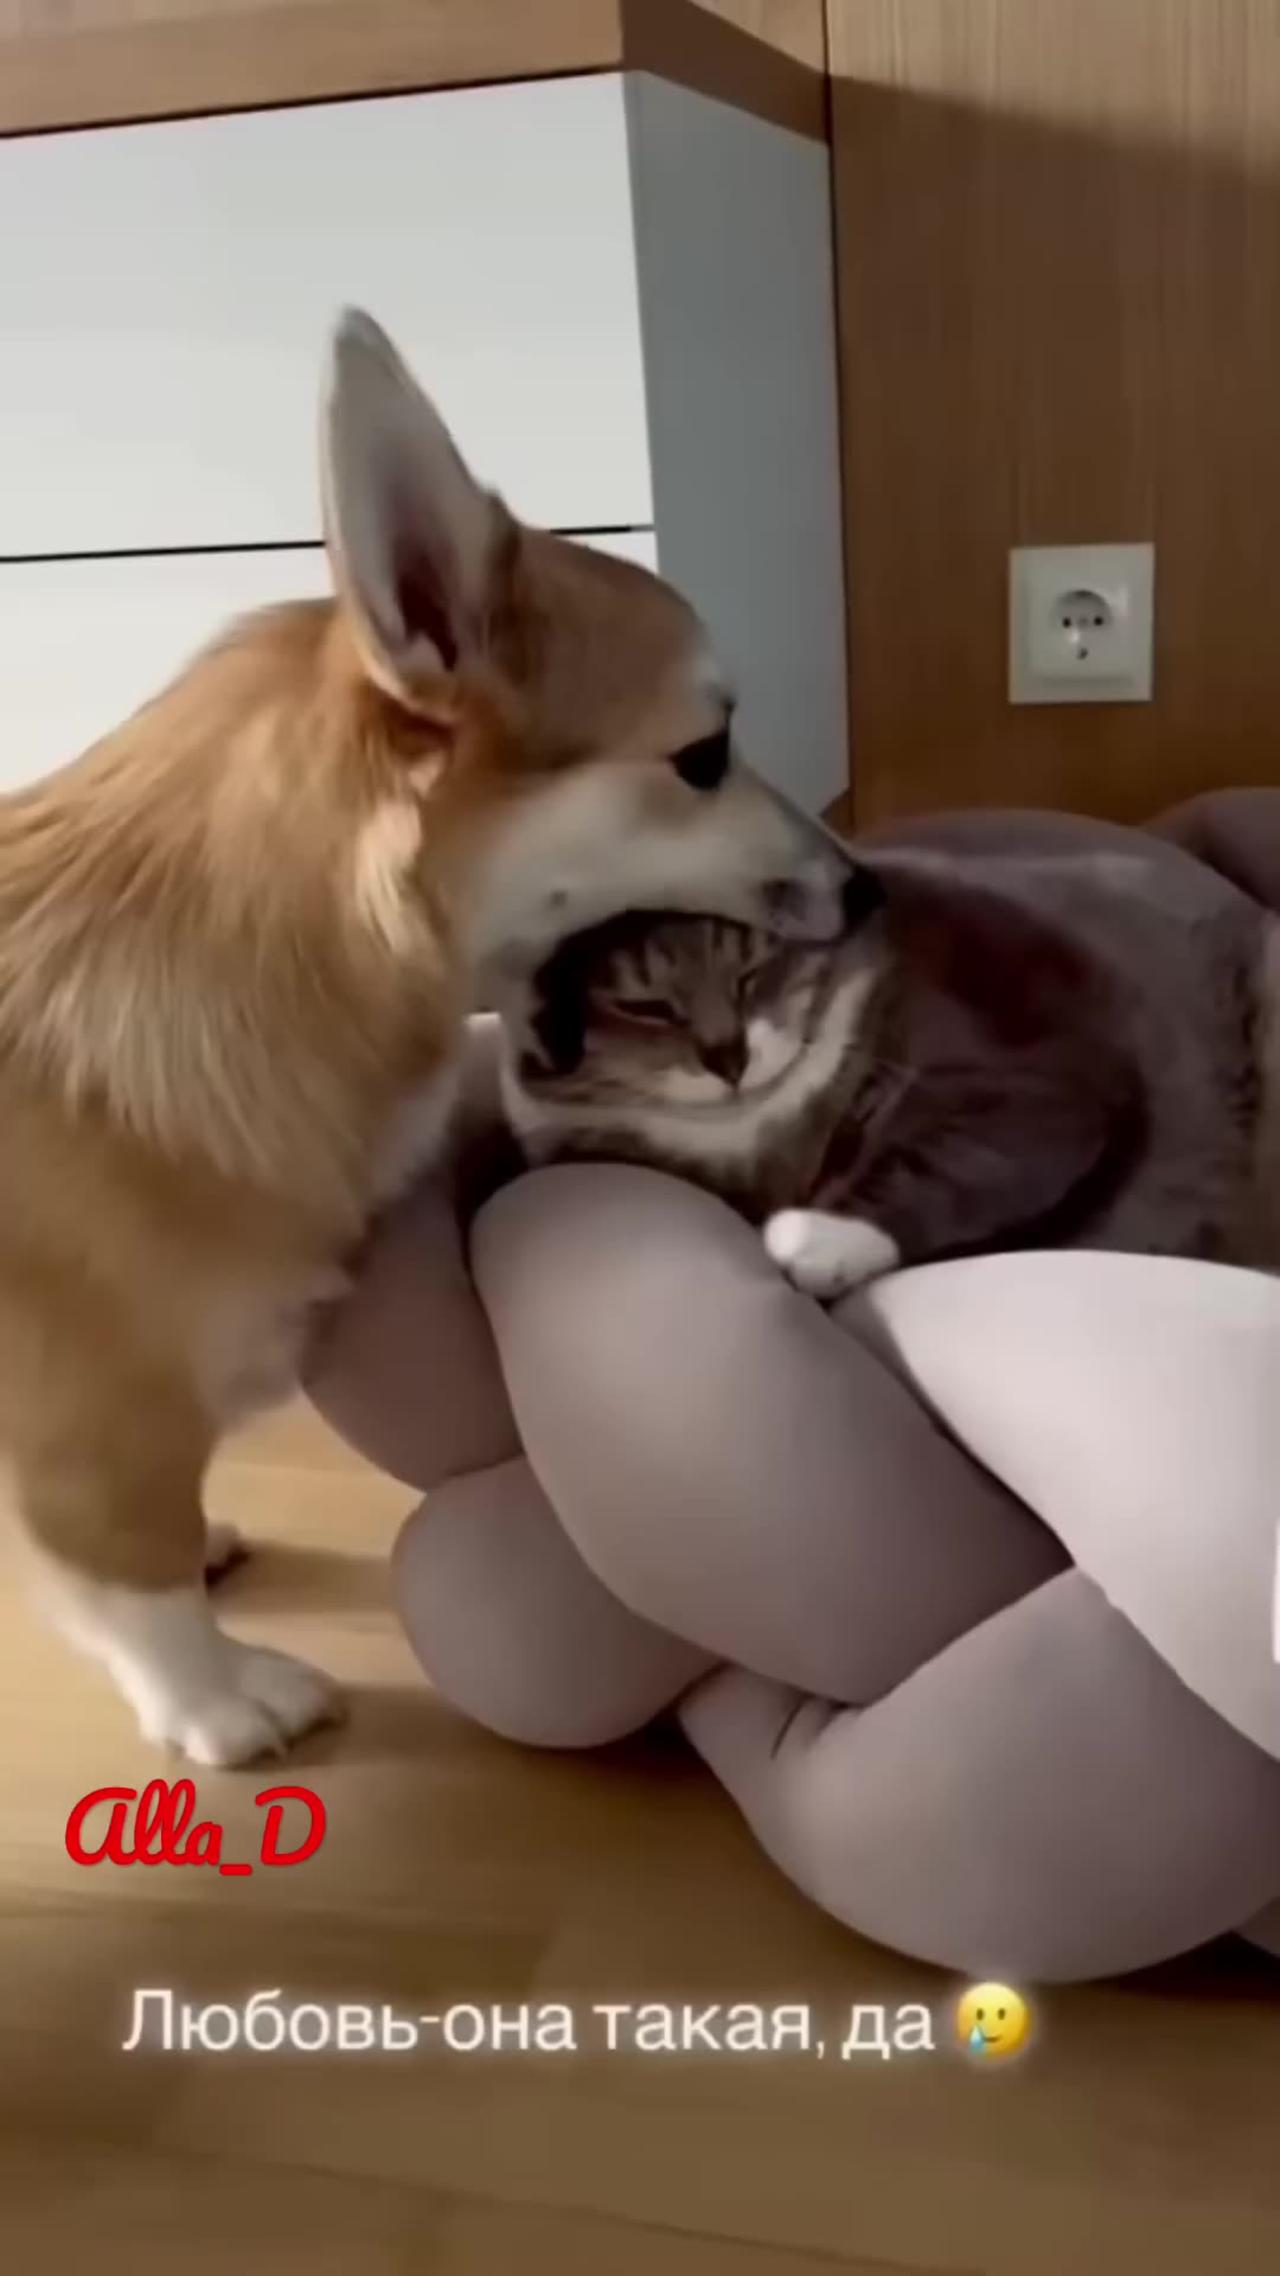 Unlikely friendship: Astonishing cat and dog duol short video